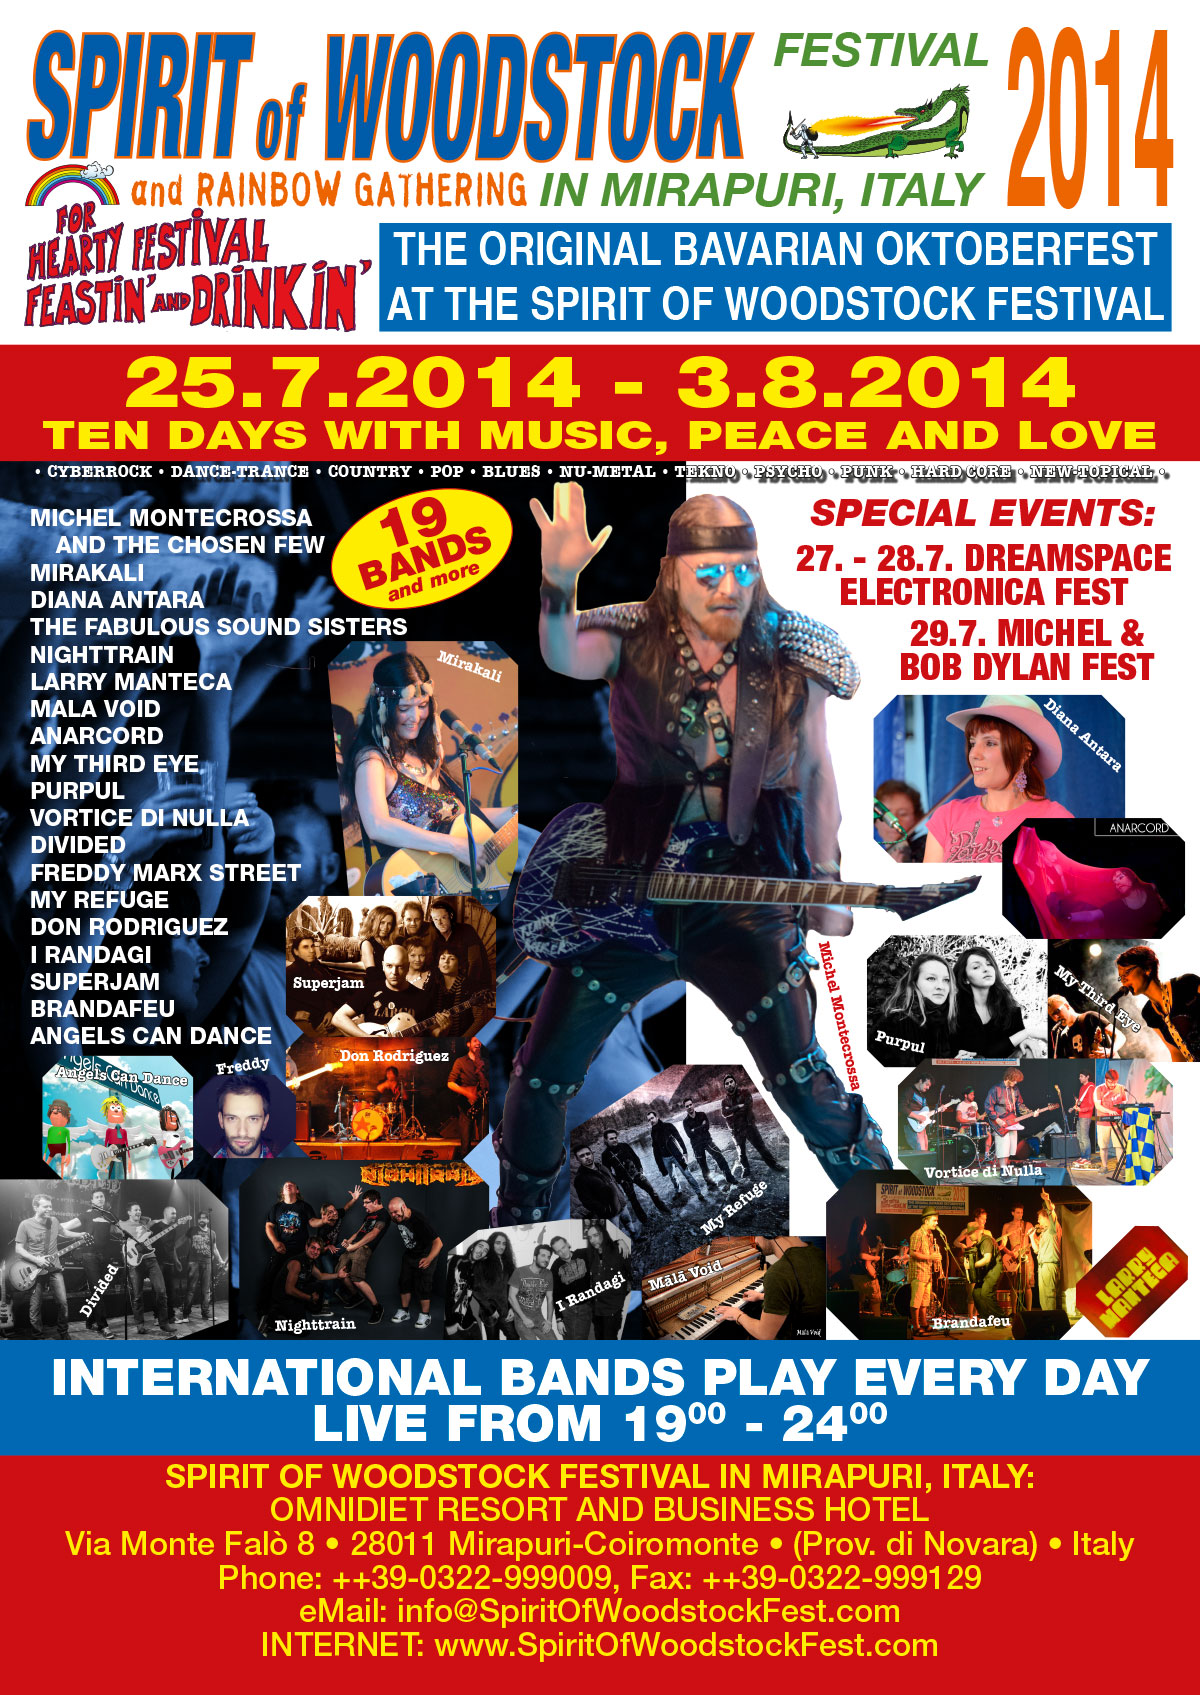 Spirit of Woodstock Festival 2014 in Mirapuri, Italy